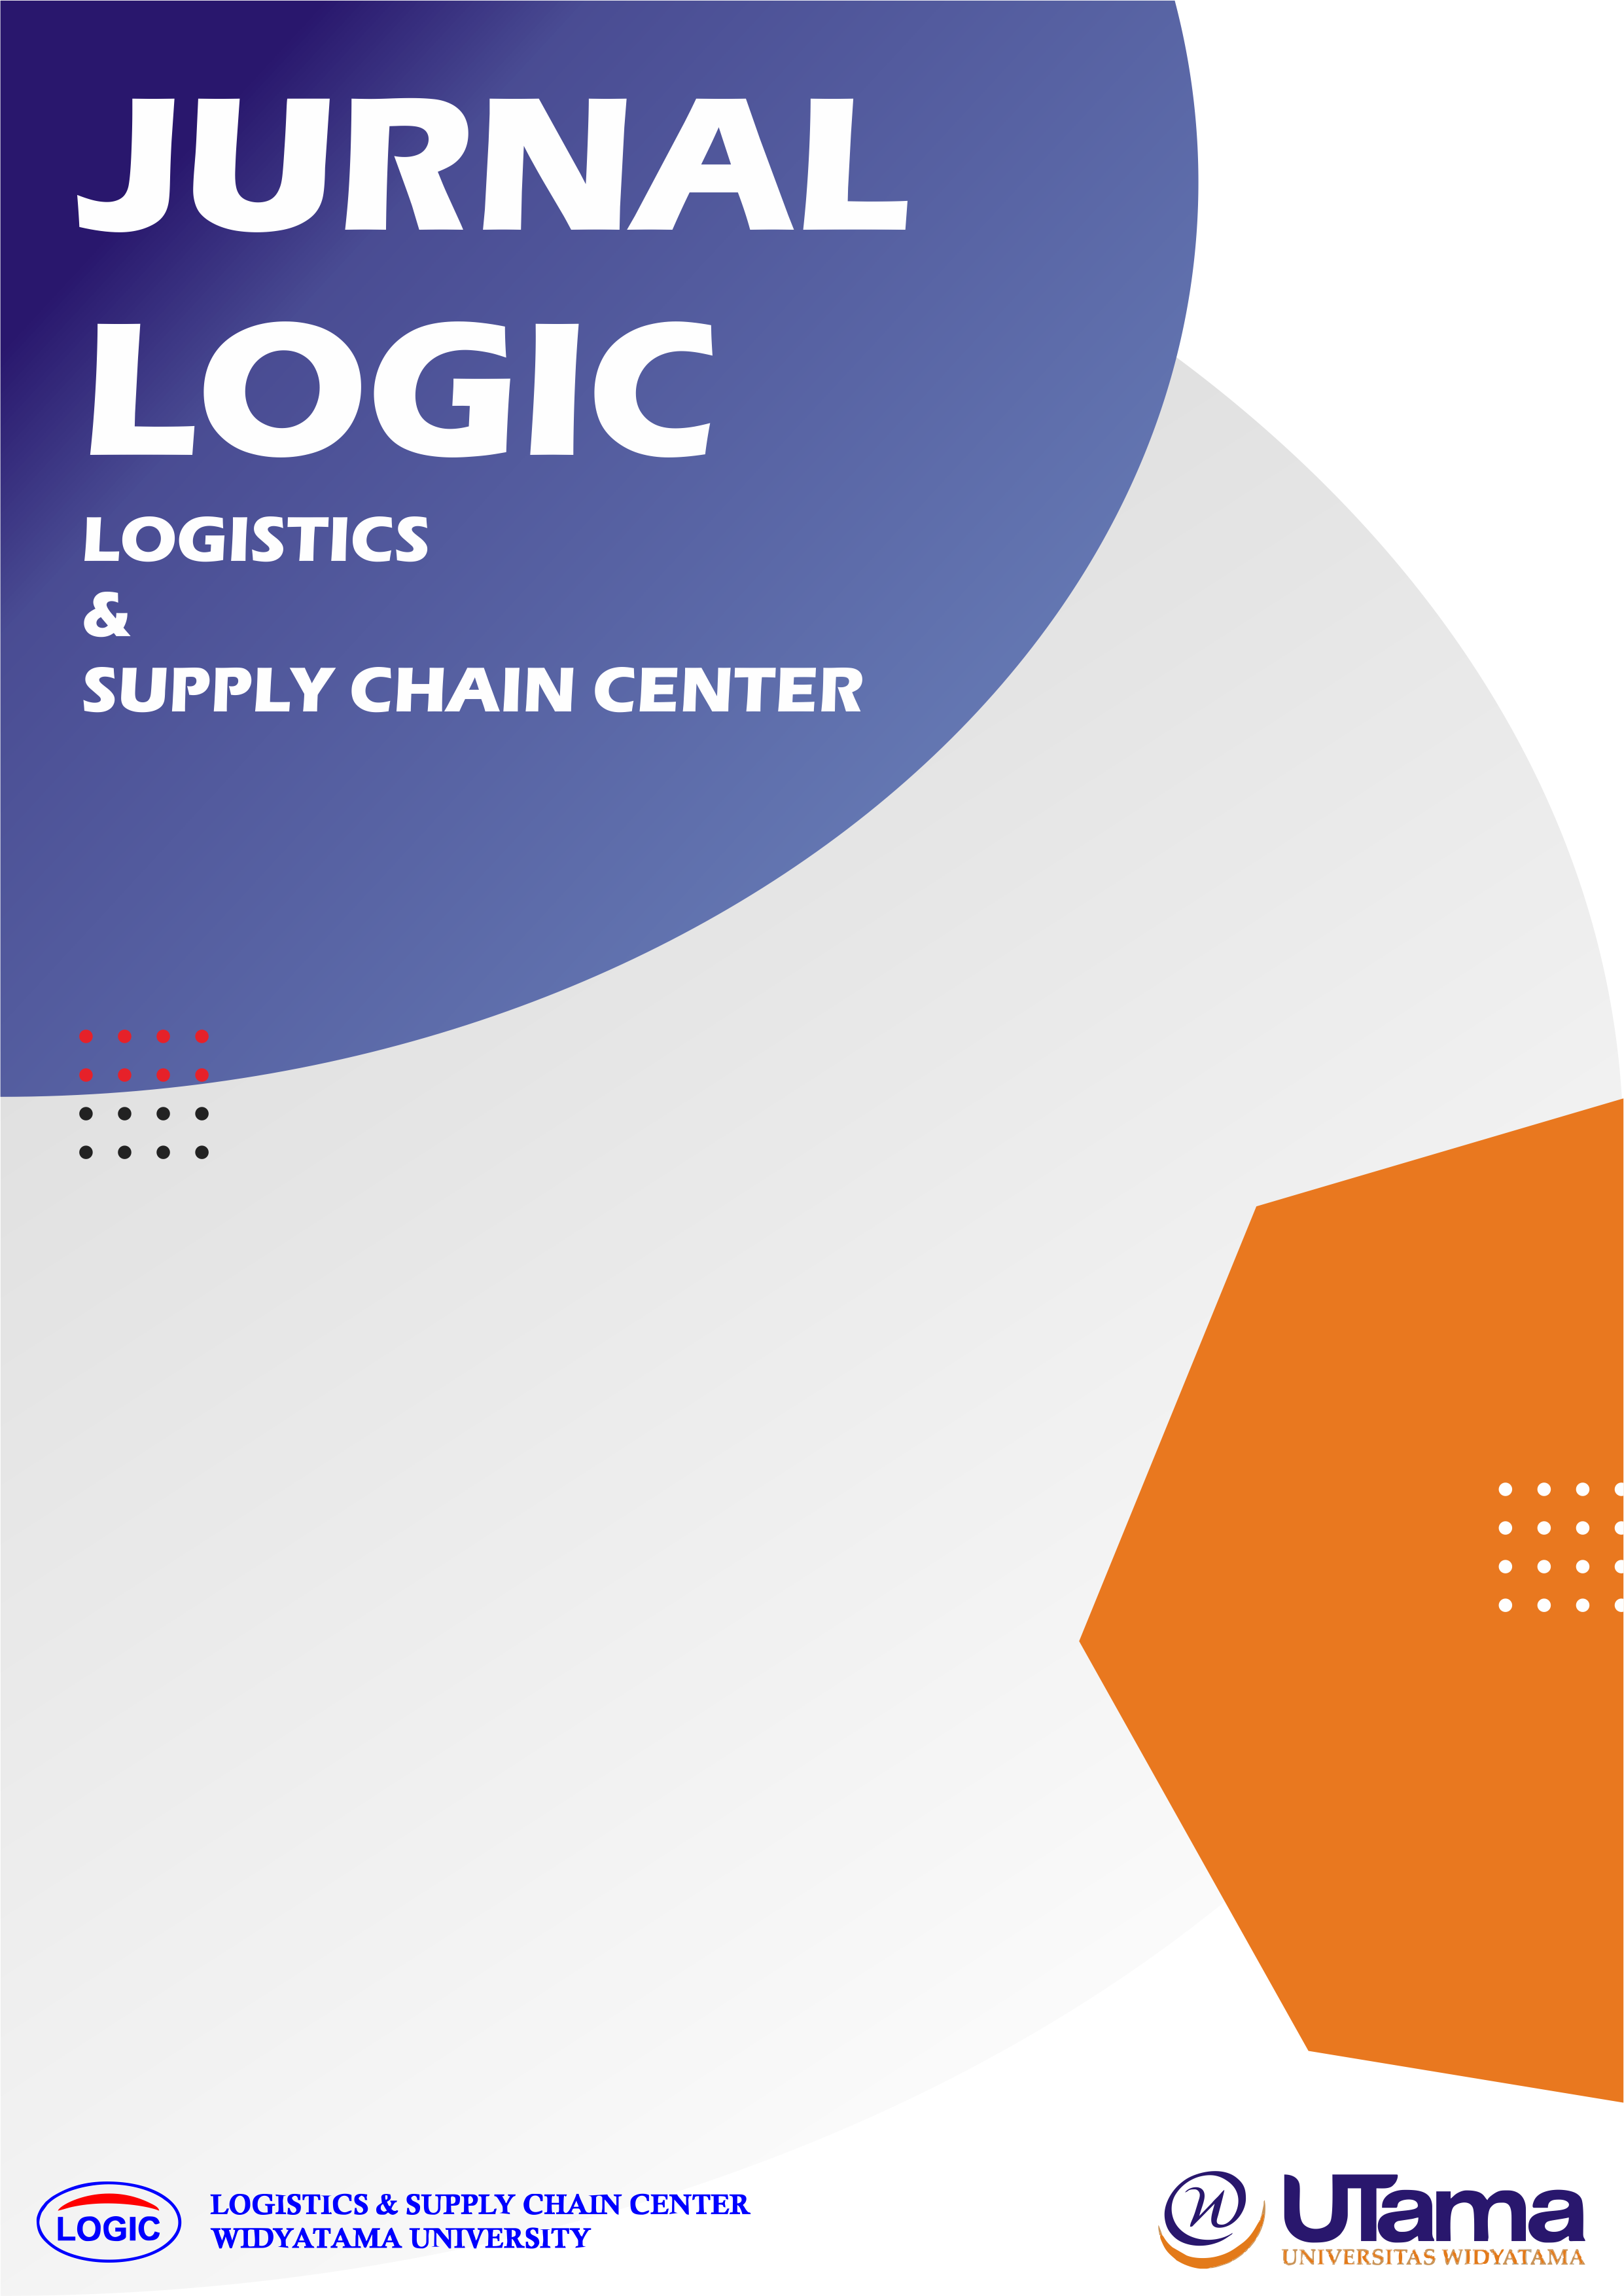 Jurnal LOGIC (Logistics & Supply Chain Center)